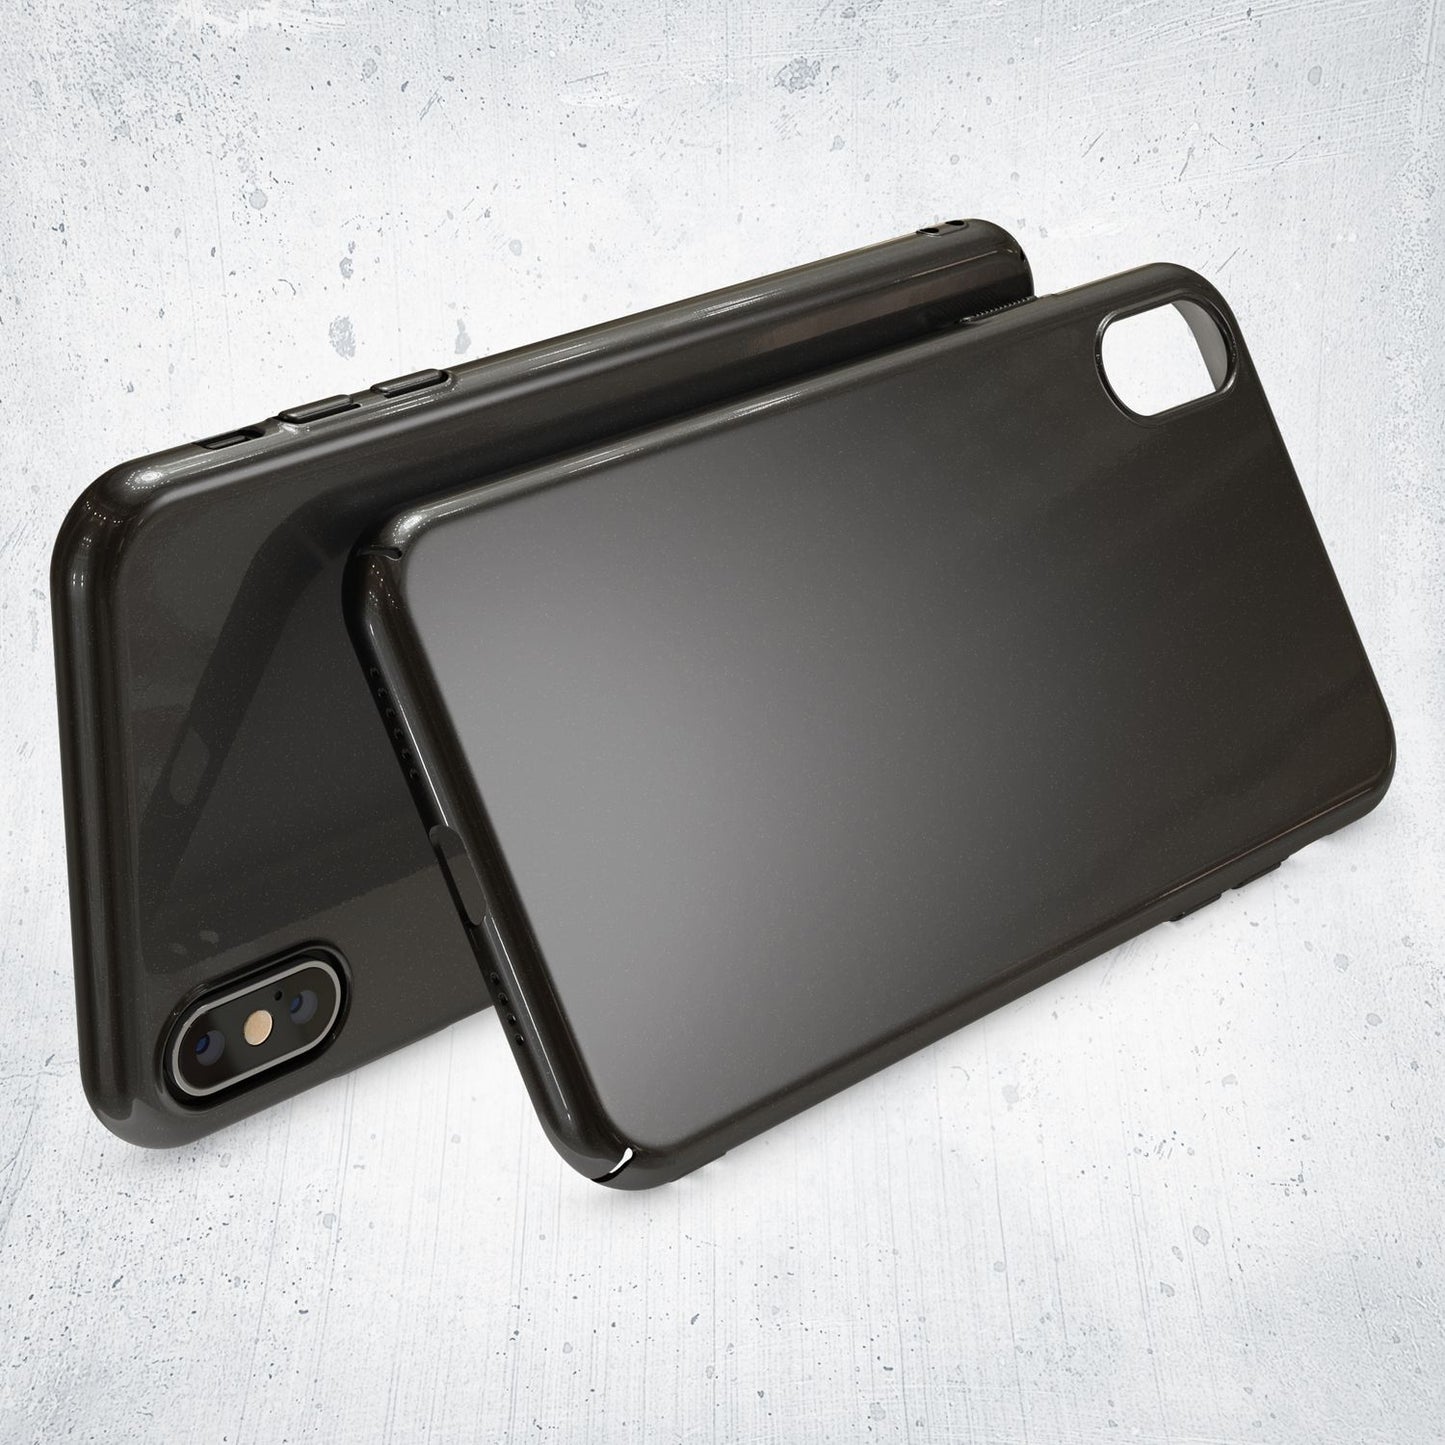 NALIA Handy Hülle für iPhone XS Max, Dünnes Hard Case Cover Etui Bumper Schutz